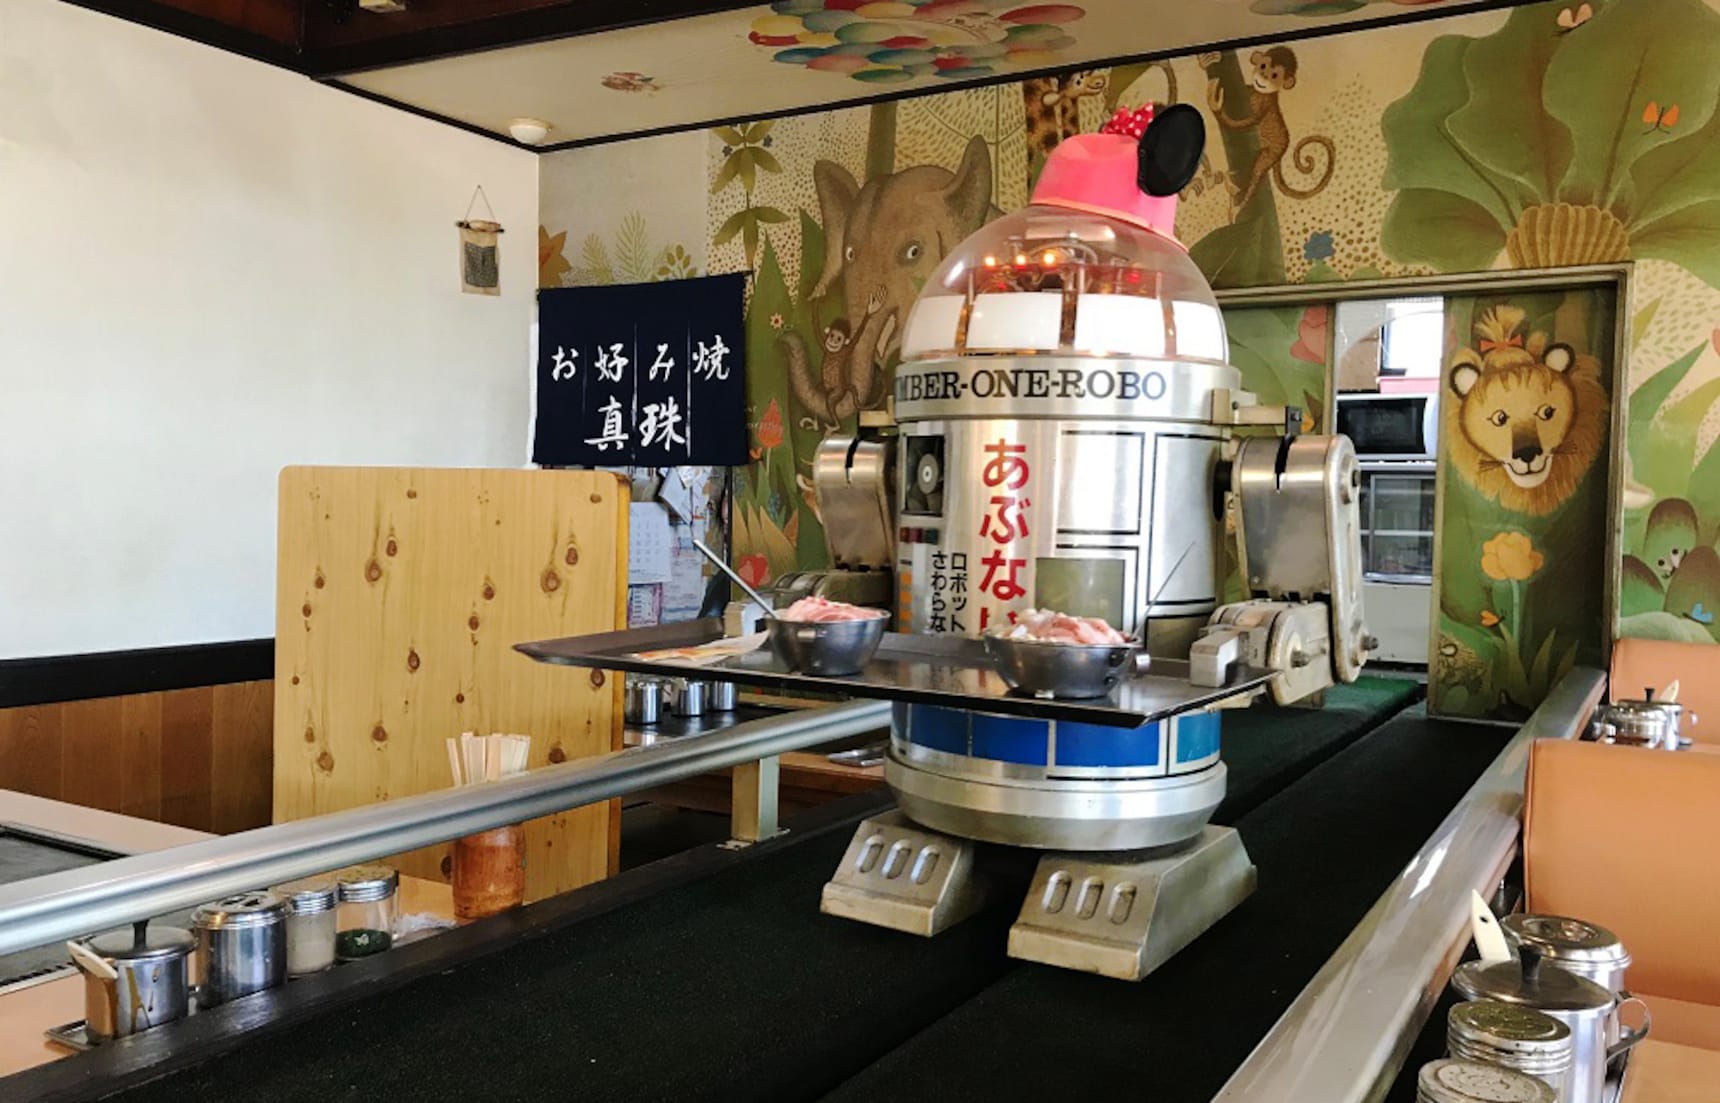 Robot Serves Up Okonomiyaki in Okayama